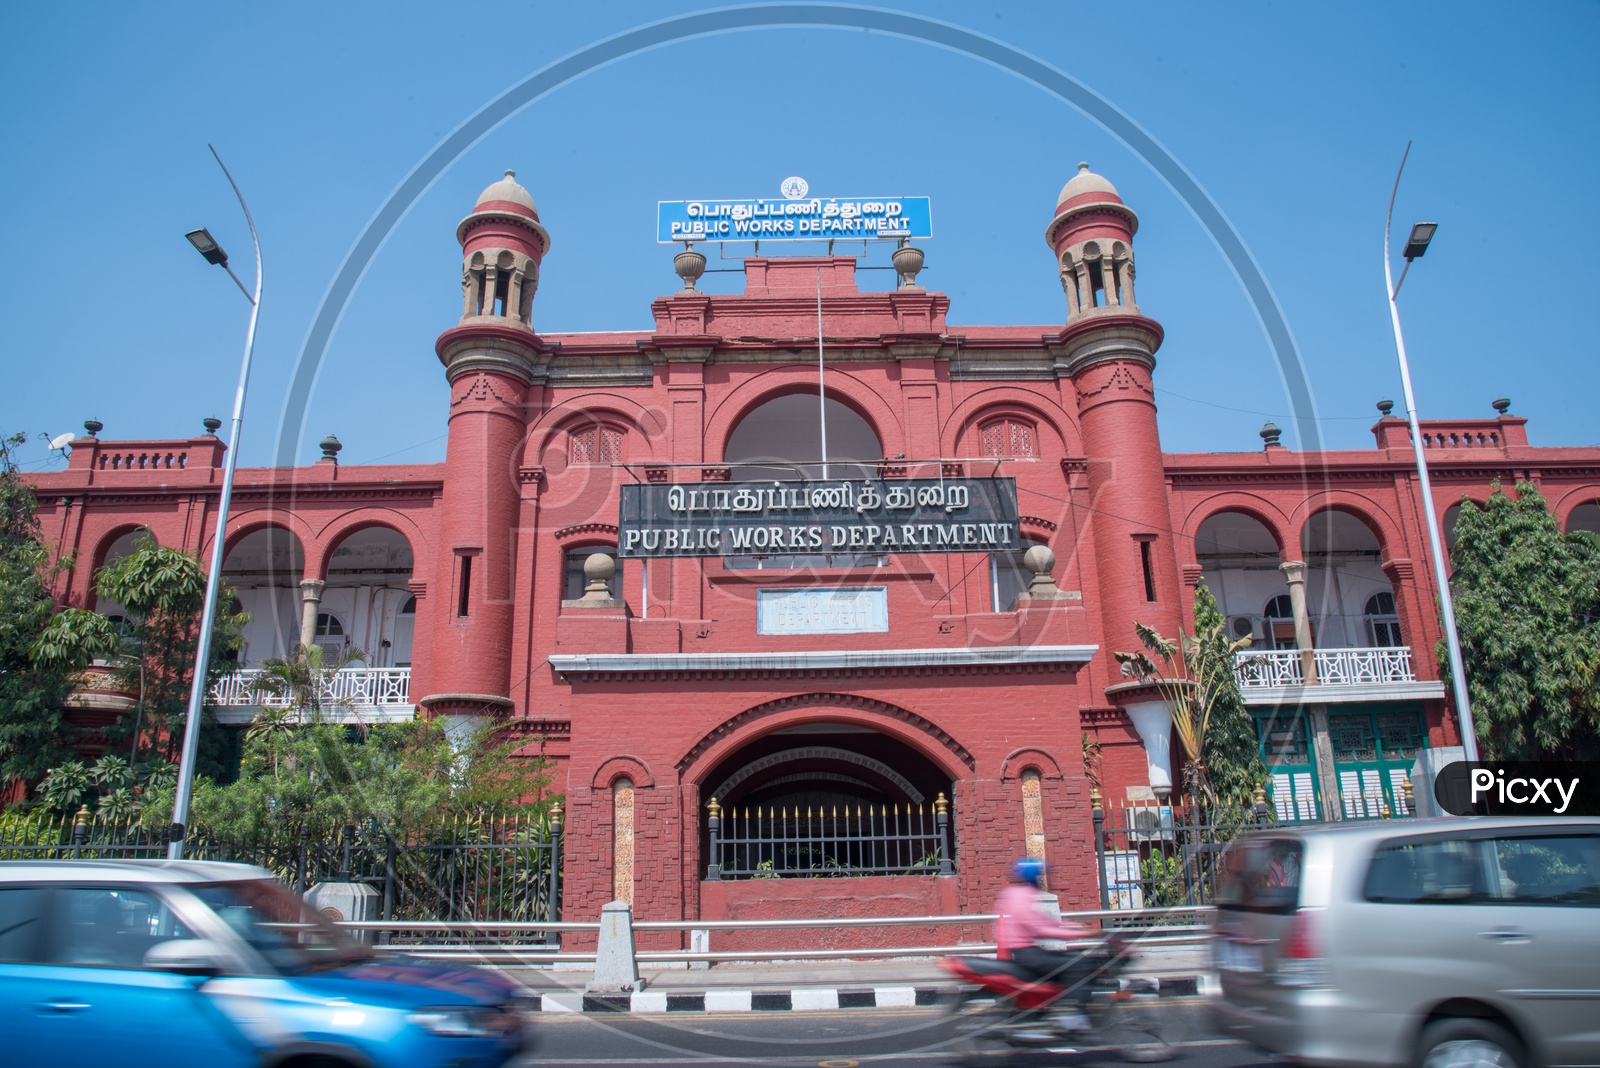 Public Works Department Building, Chennai